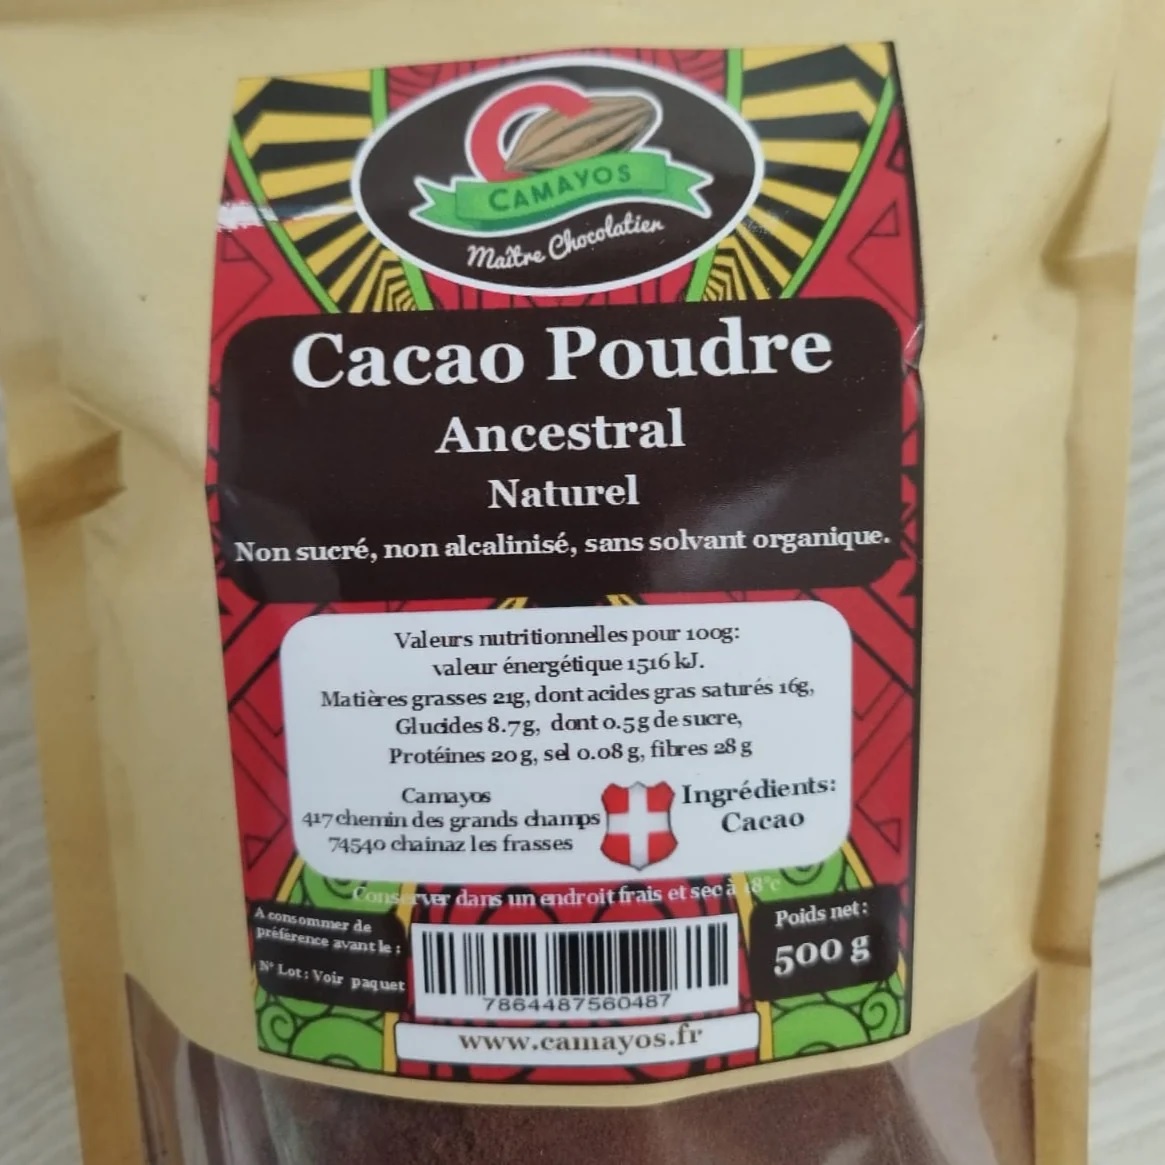 cacao-poudre-camayos-2